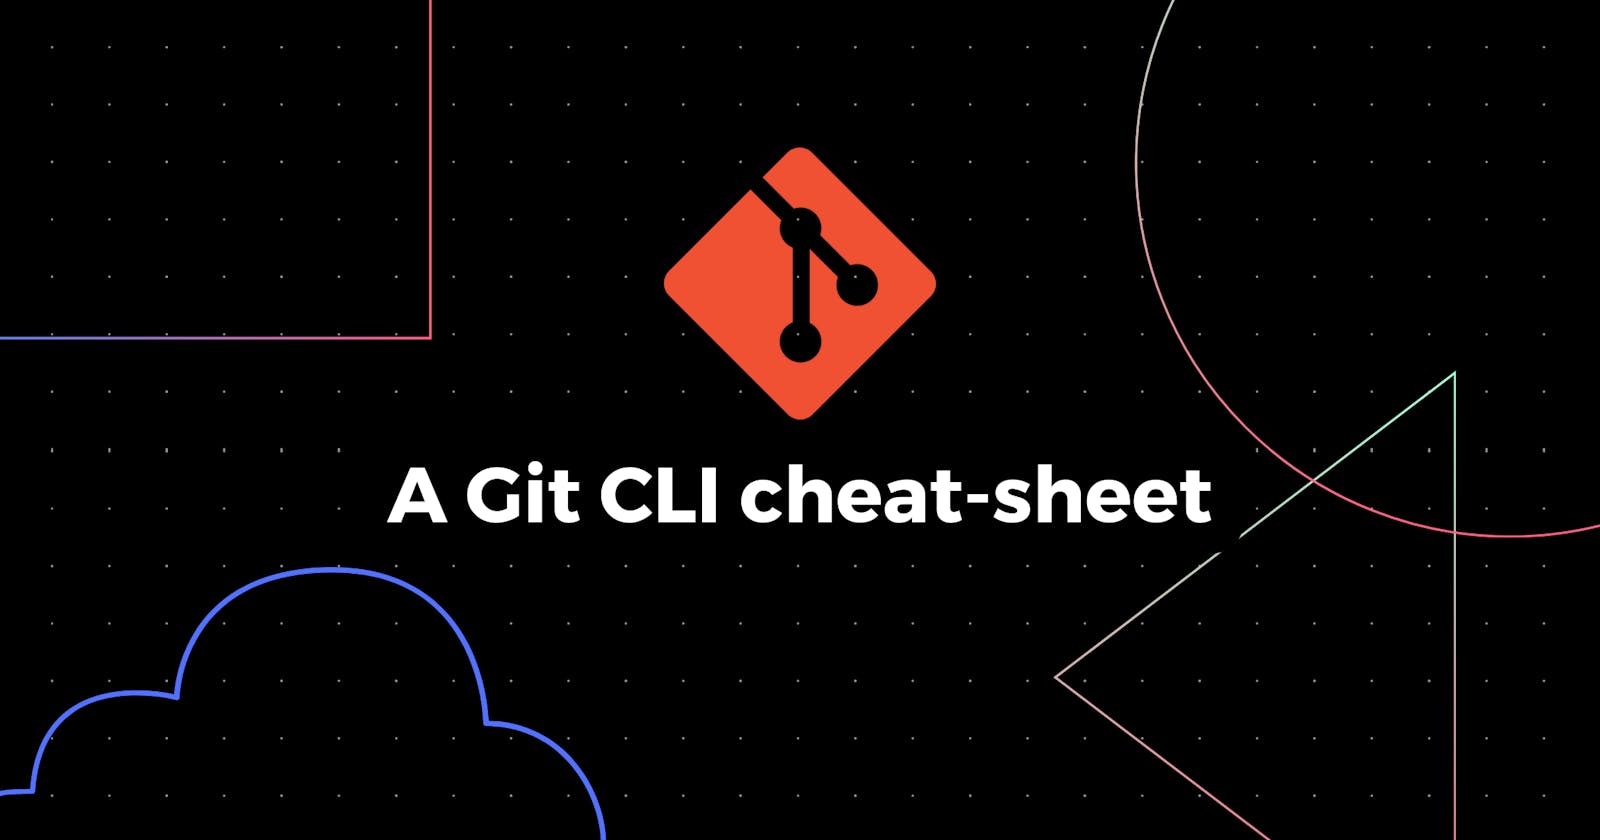 A Git CLI cheat-sheet